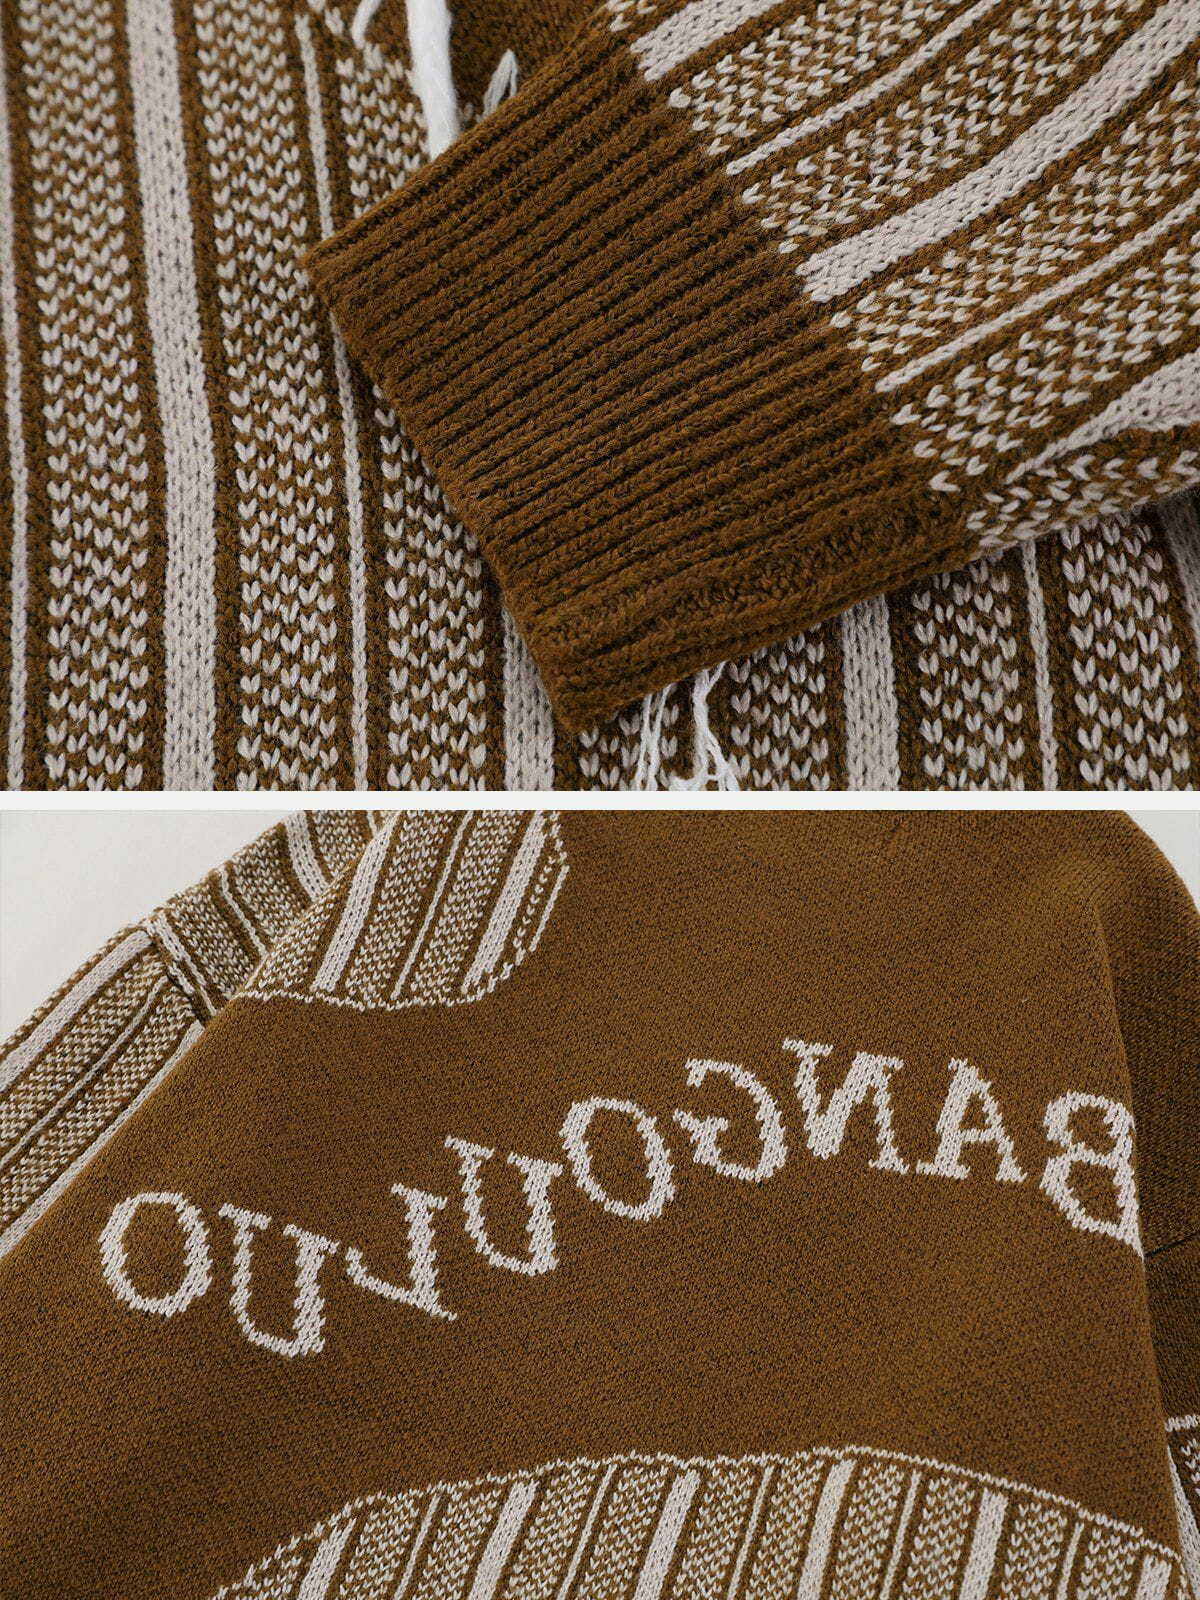 tassel detail knit sweater edgy streetwear essential 1734